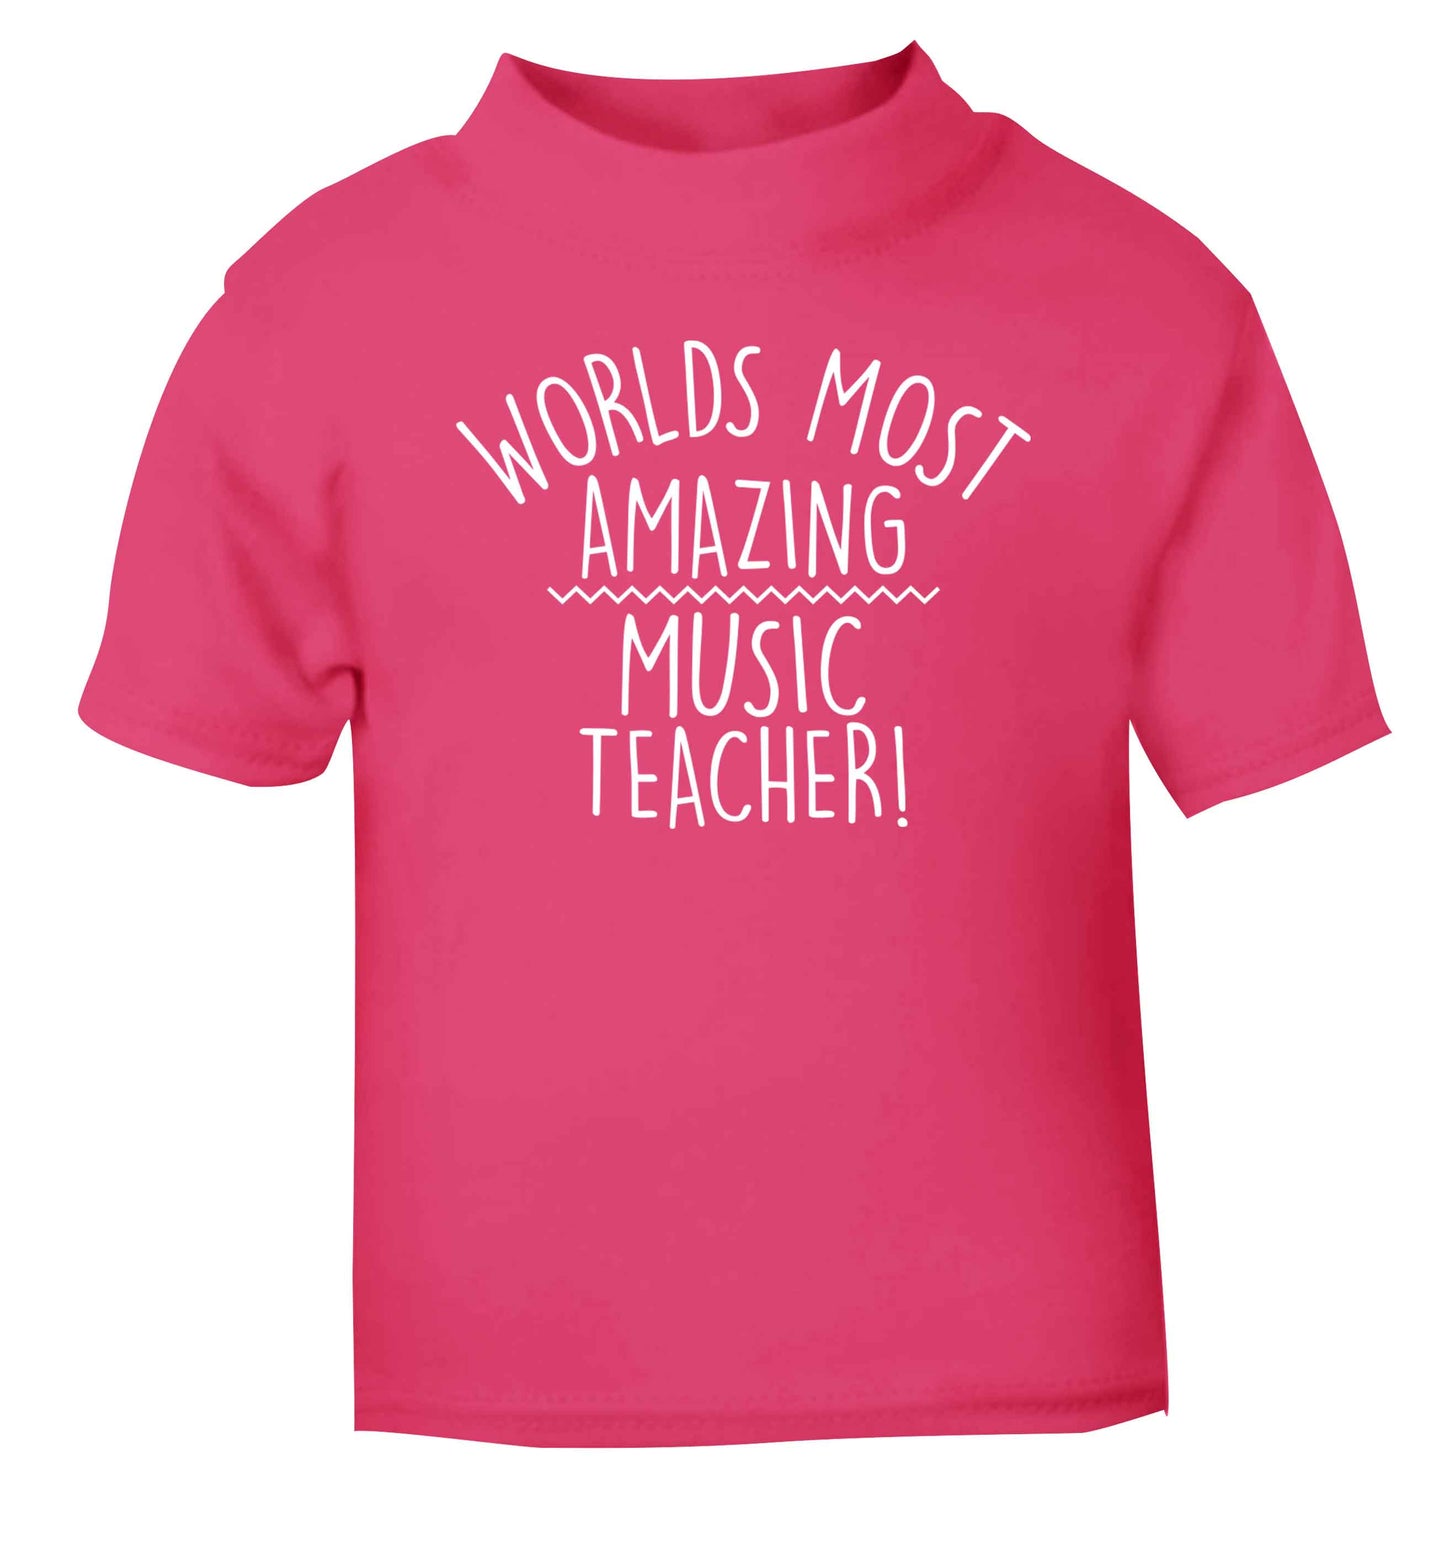 Worlds most amazing music teacher pink baby toddler Tshirt 2 Years